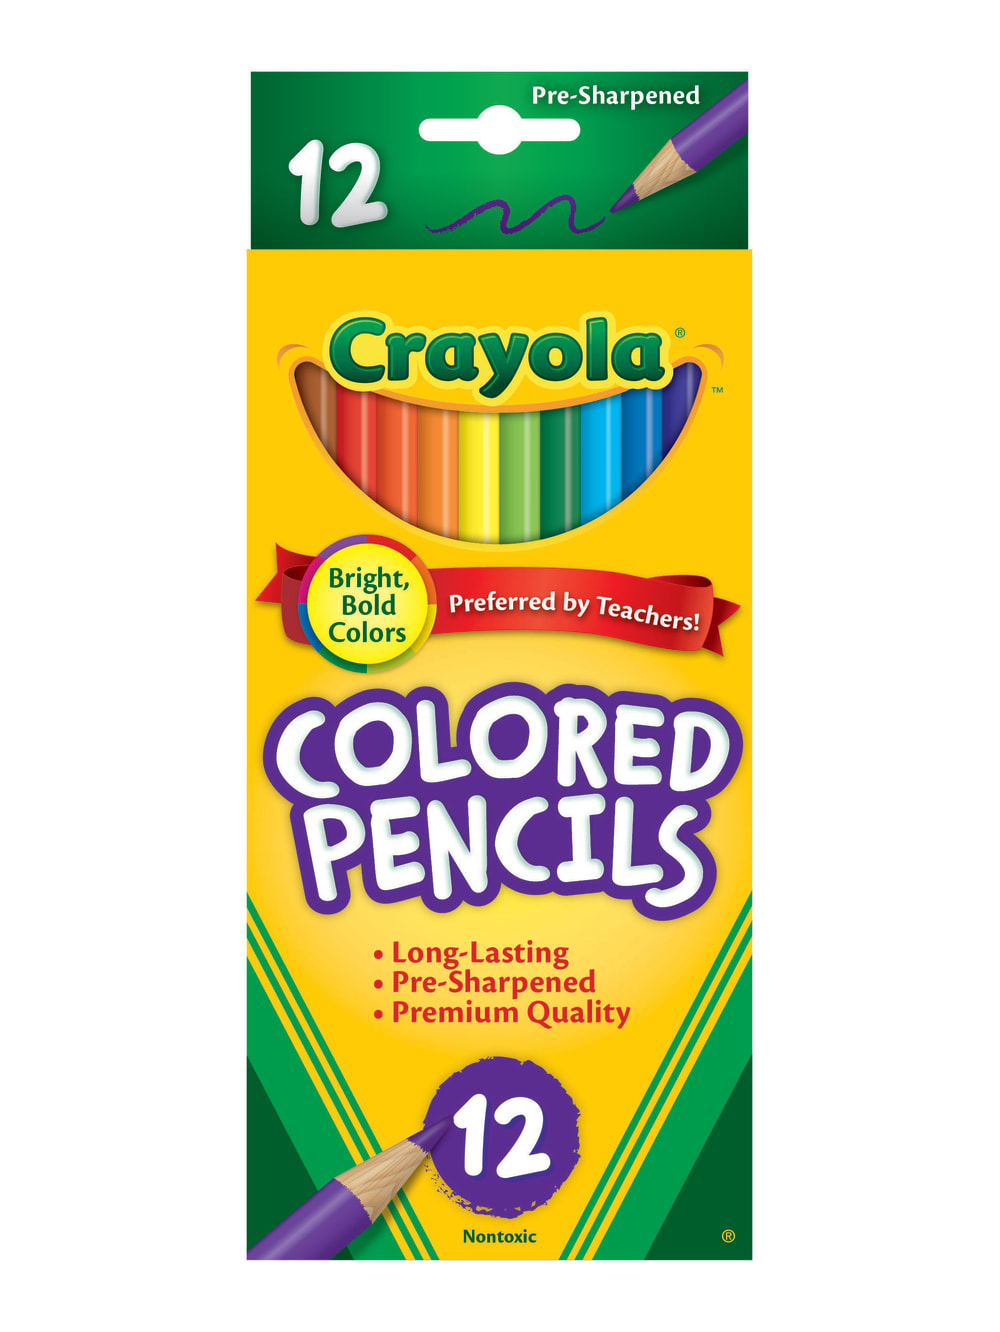 Crayola® Color Pencils, Assorted Colors, Set Of 12 Color Pencils
				
		        		












	
			
				
				 
					Item # 
					
						
							
							
								504928